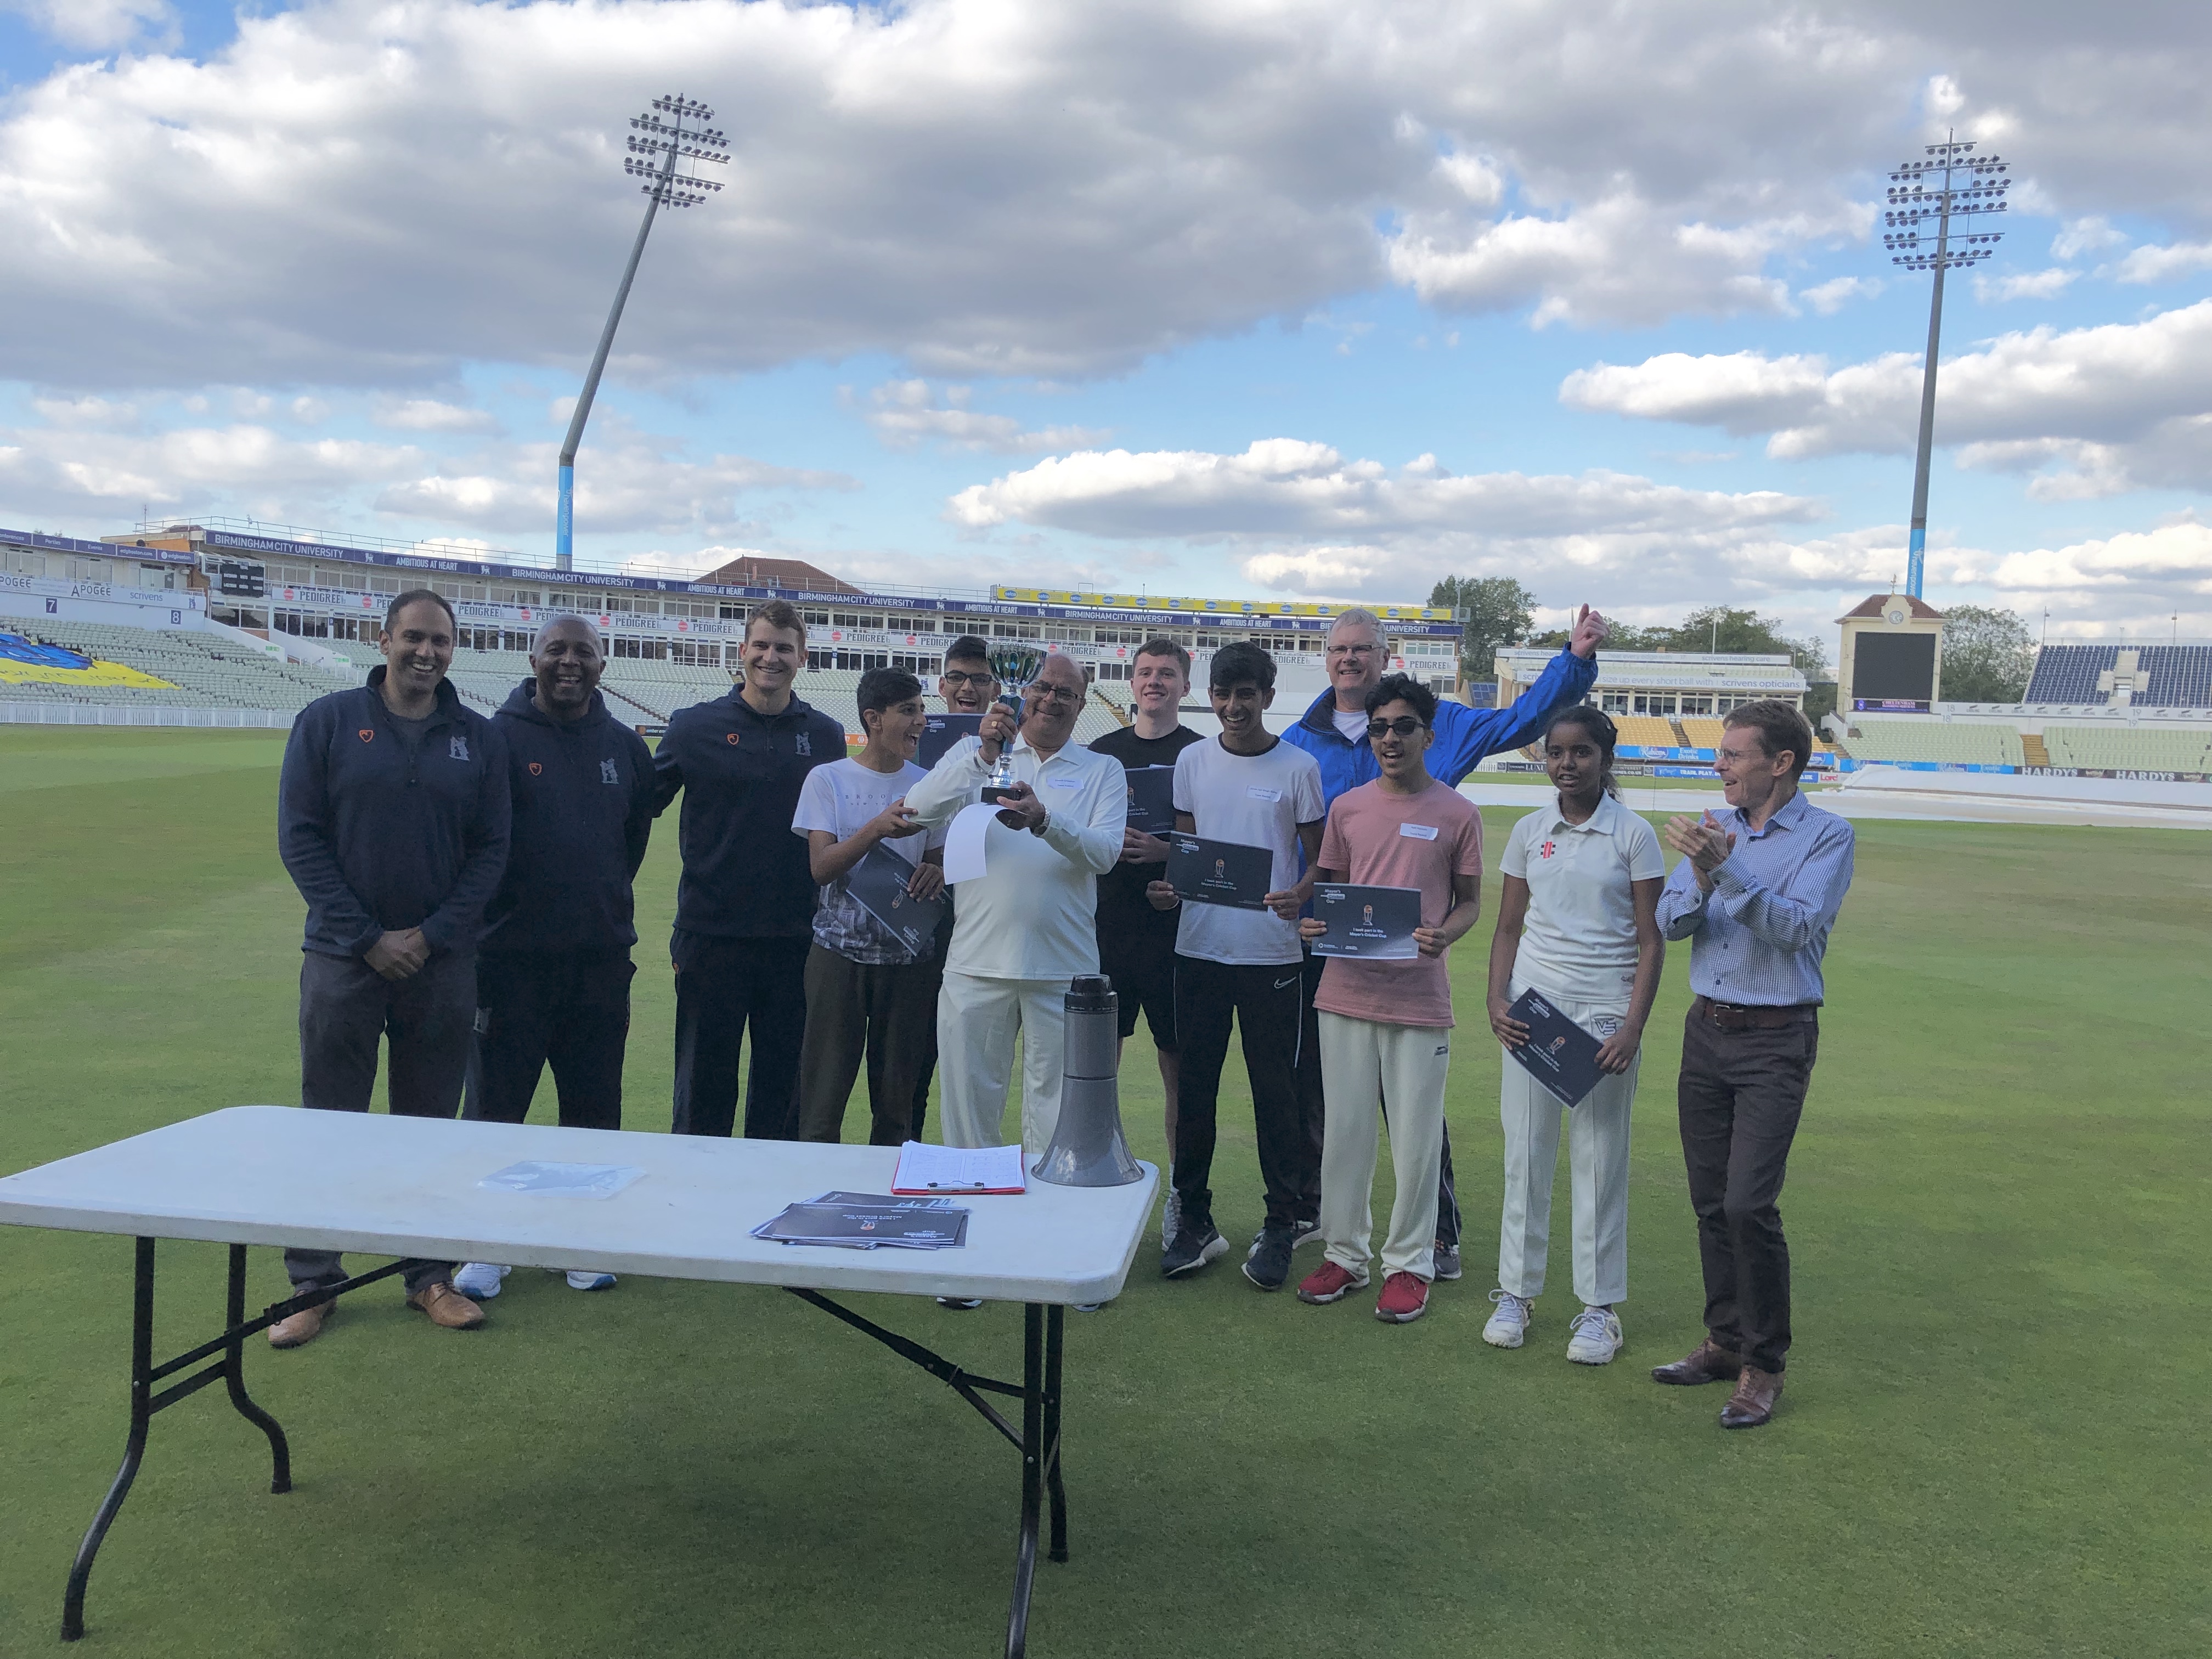 Team Rashid emerged vistorious to lift the Mayor's Cricket Cup at Edgbaston